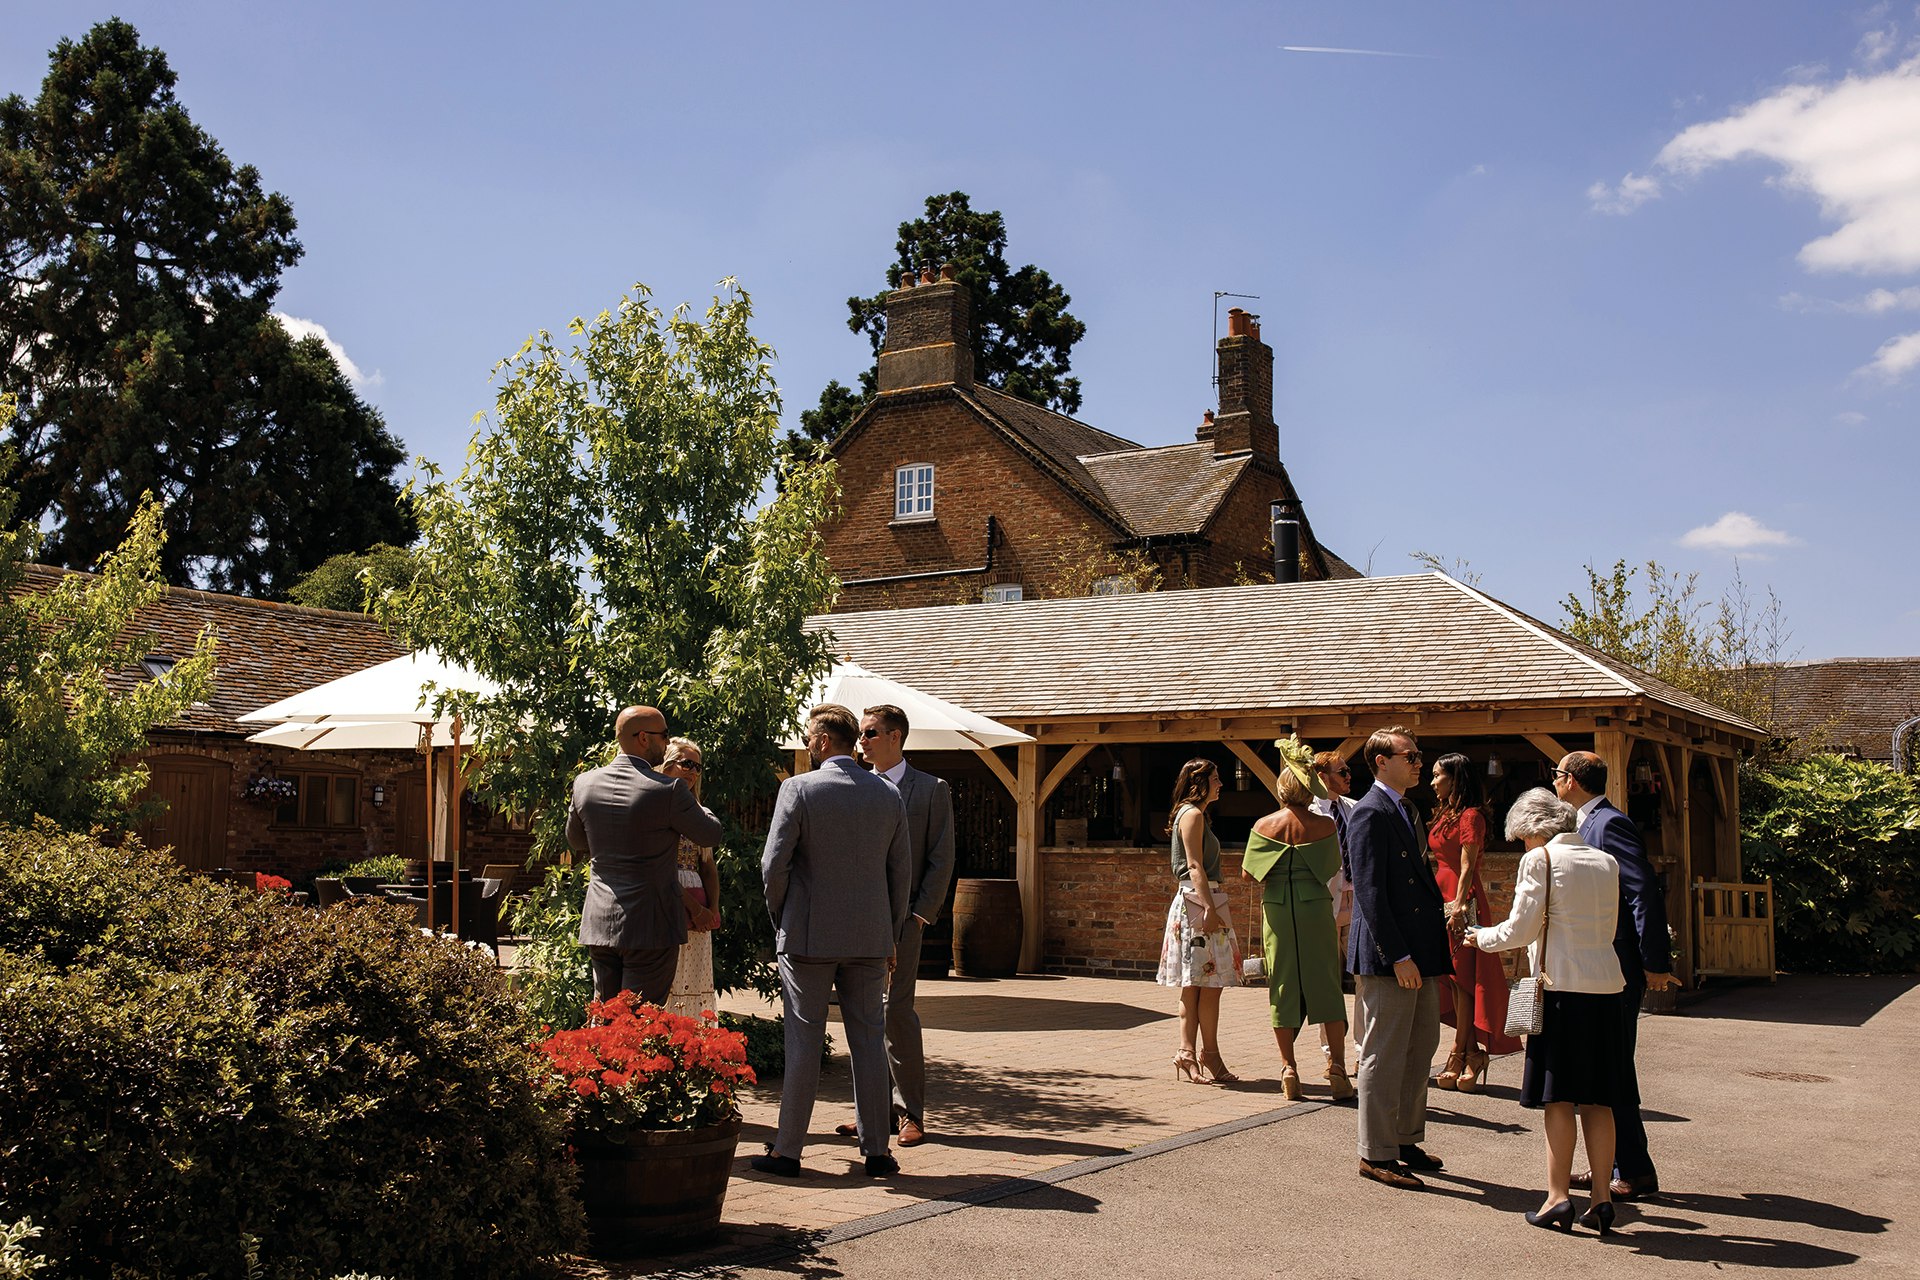 Mythe Barn Weddings - The Courtyard image 2